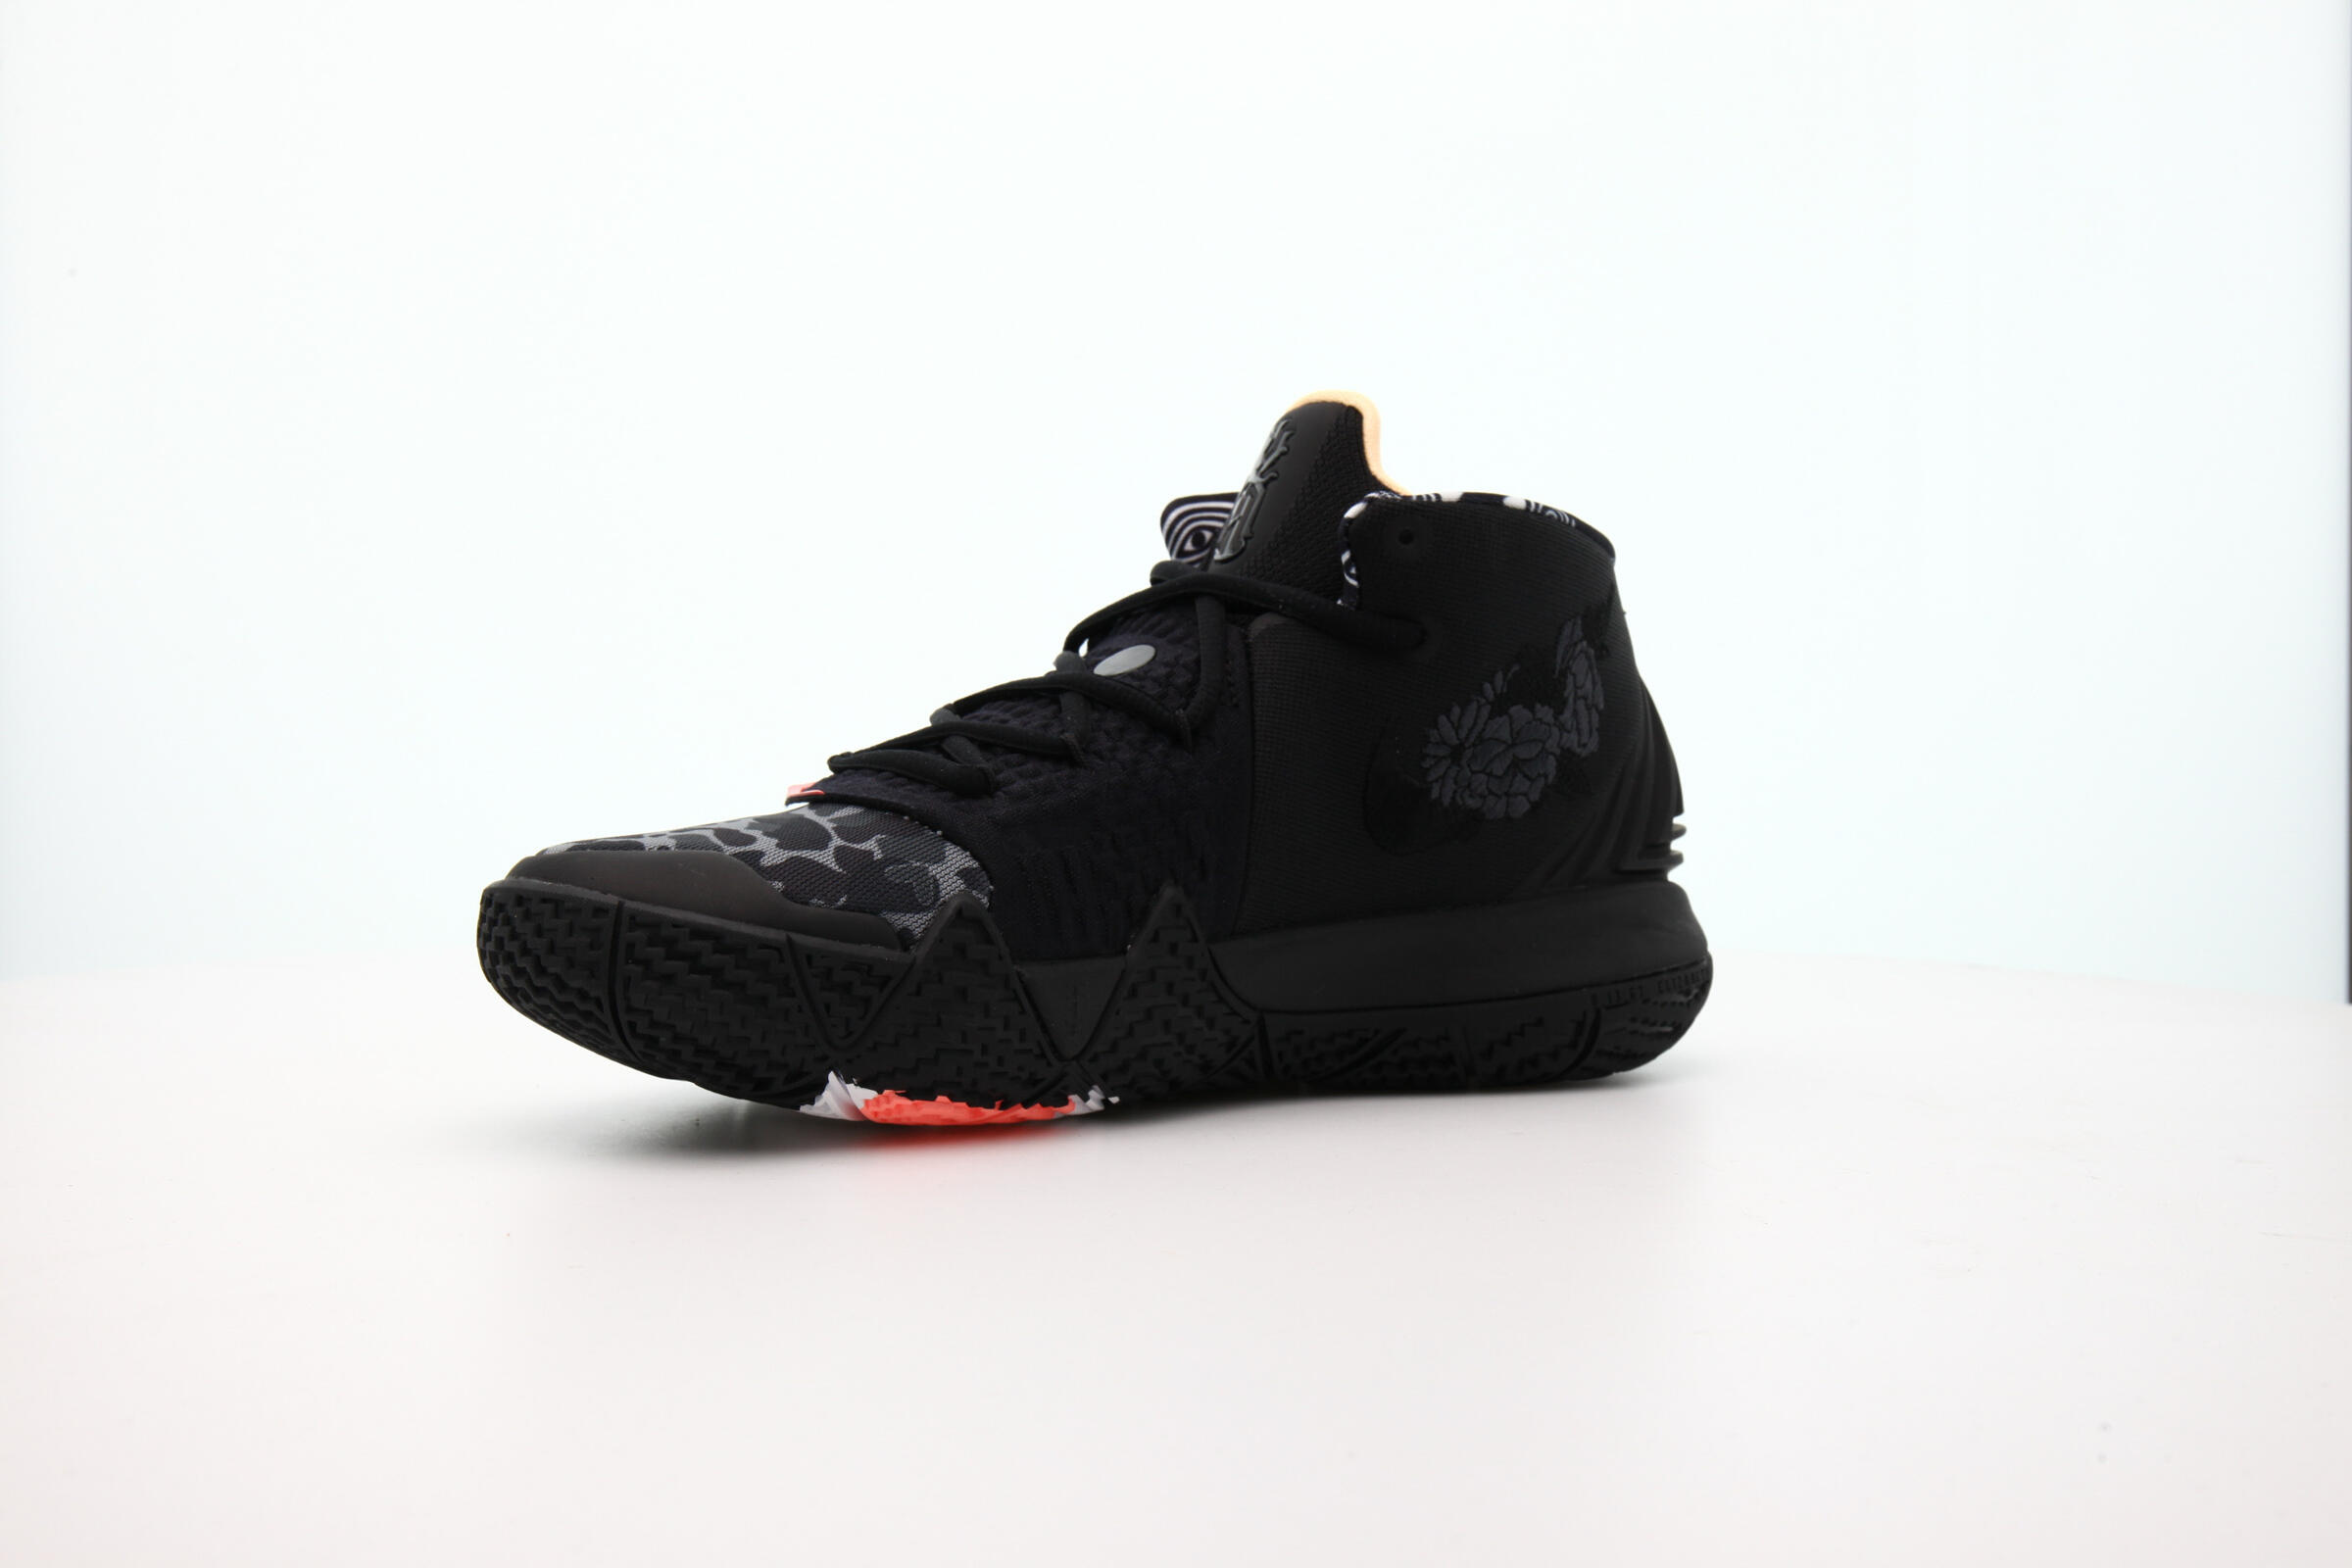 Nike KYBRID S2 "BLACK"